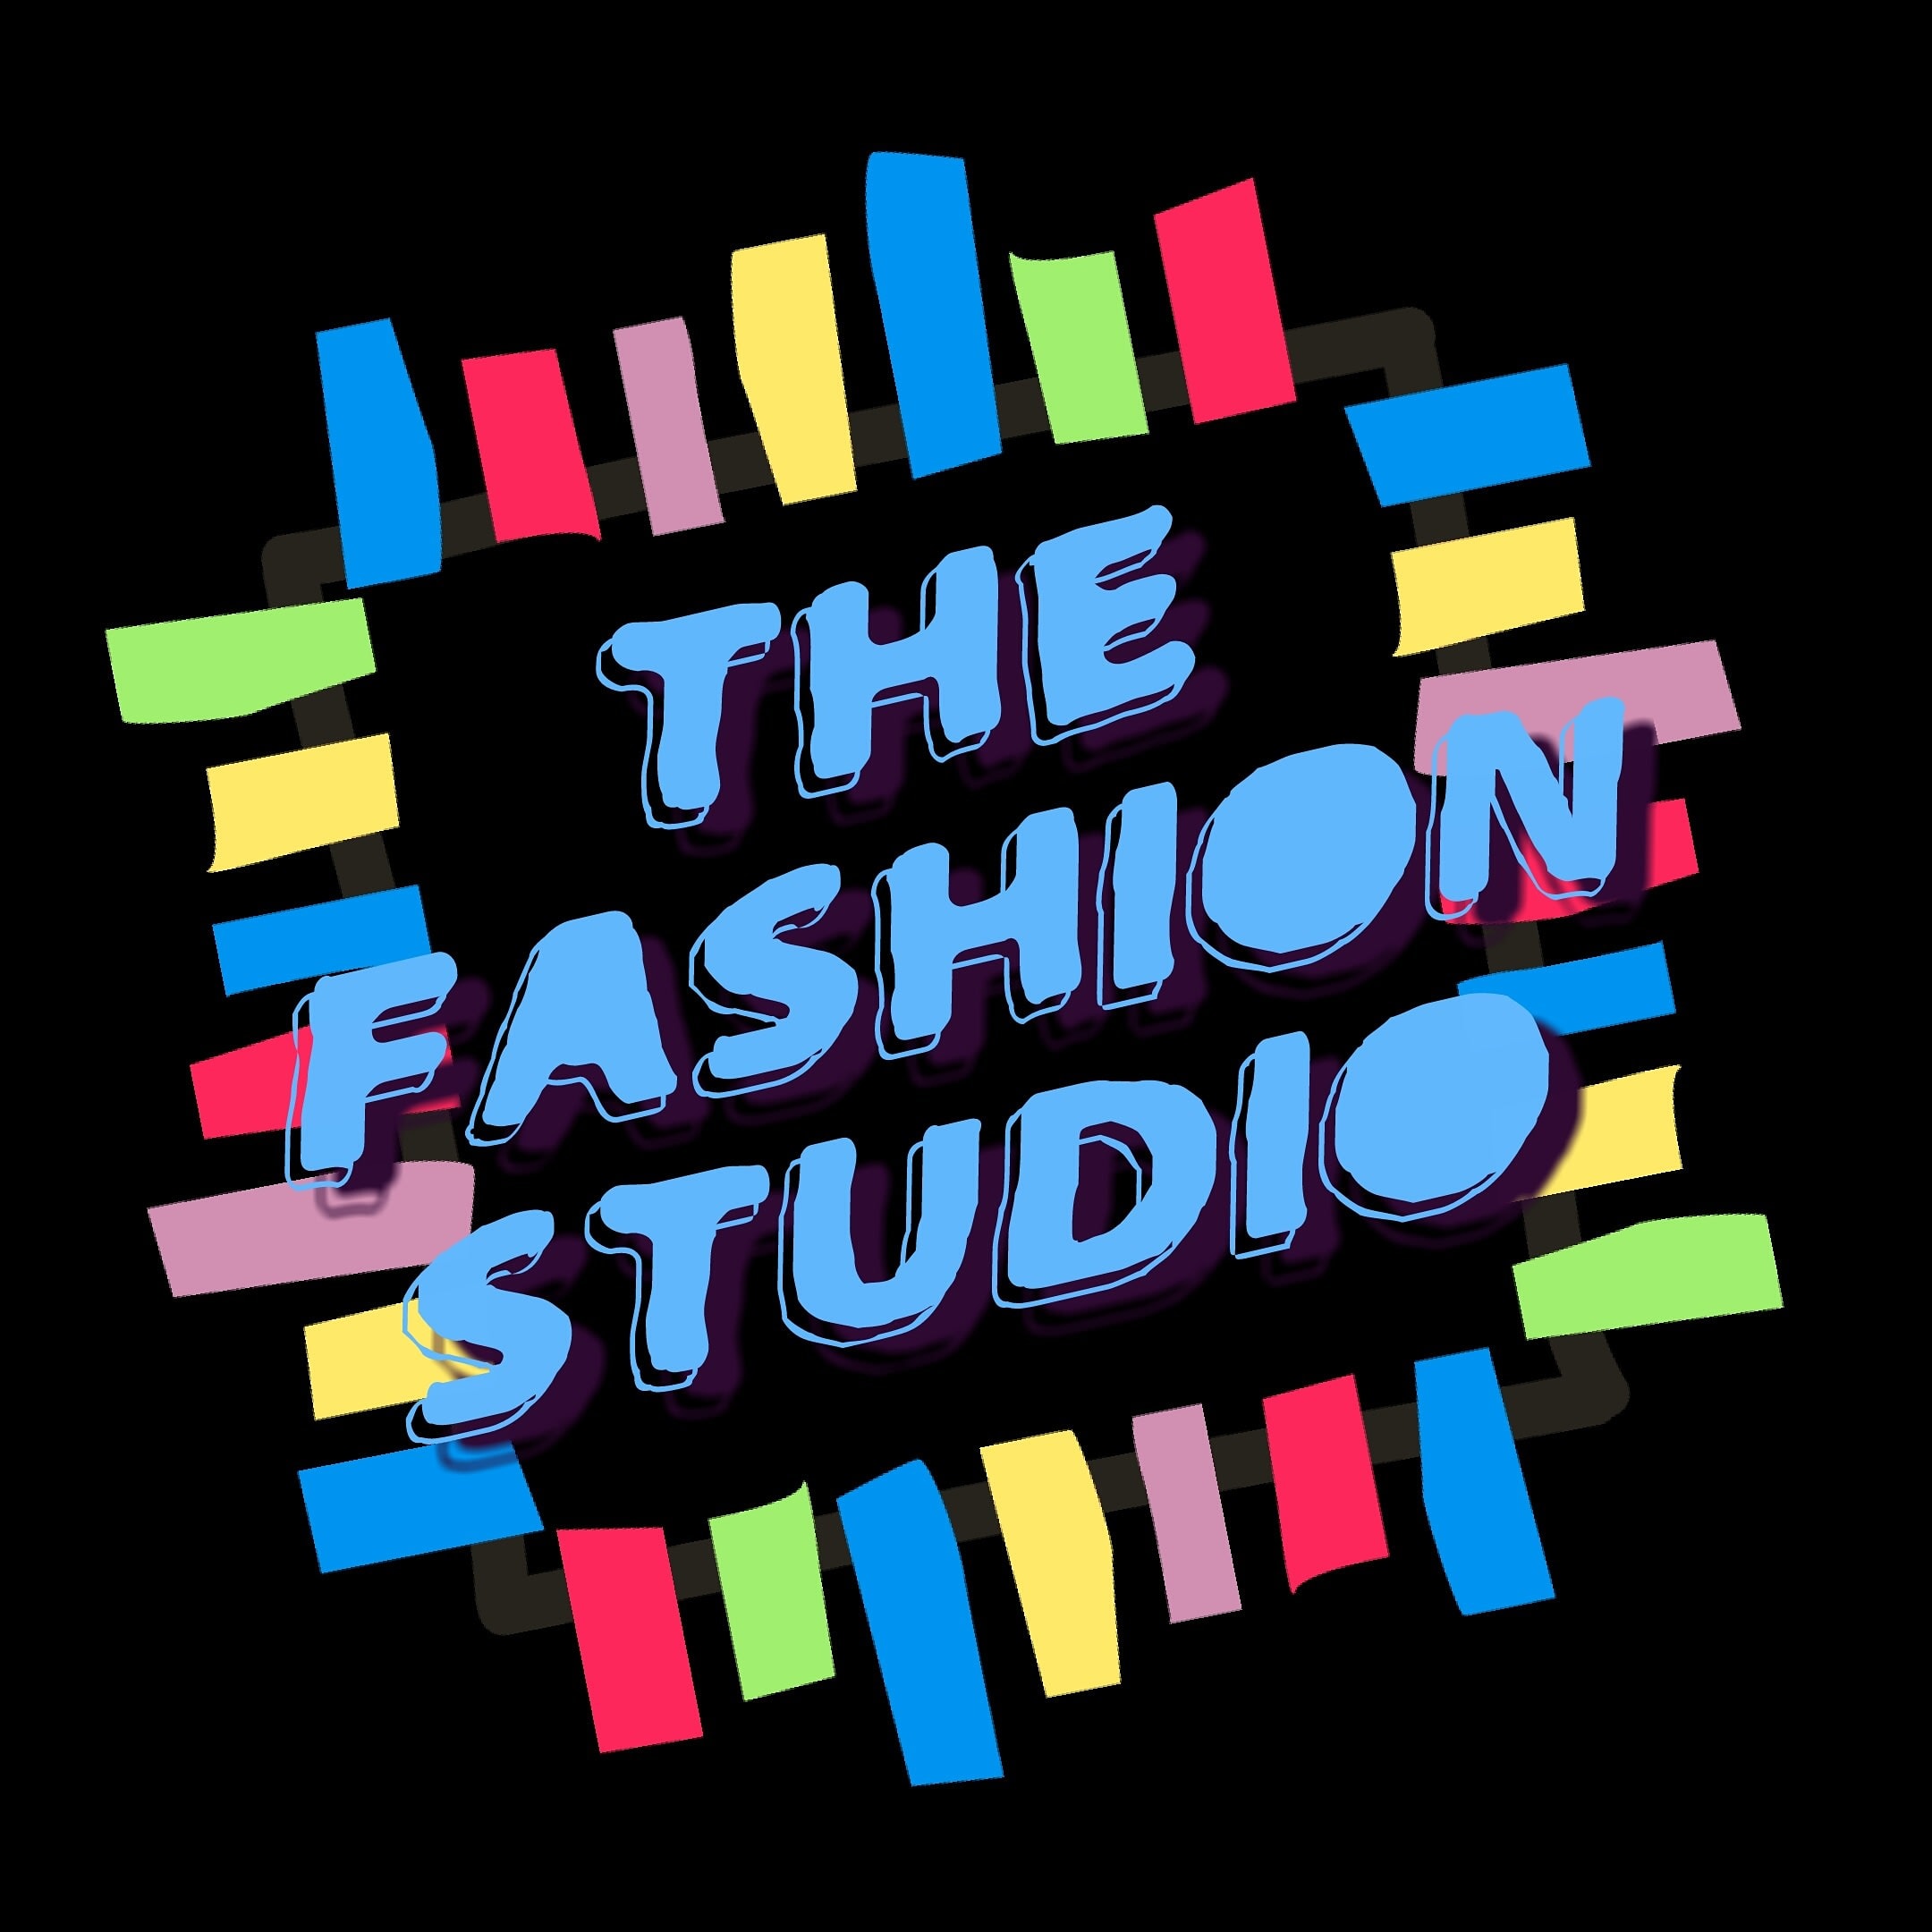 The Fashion Studio